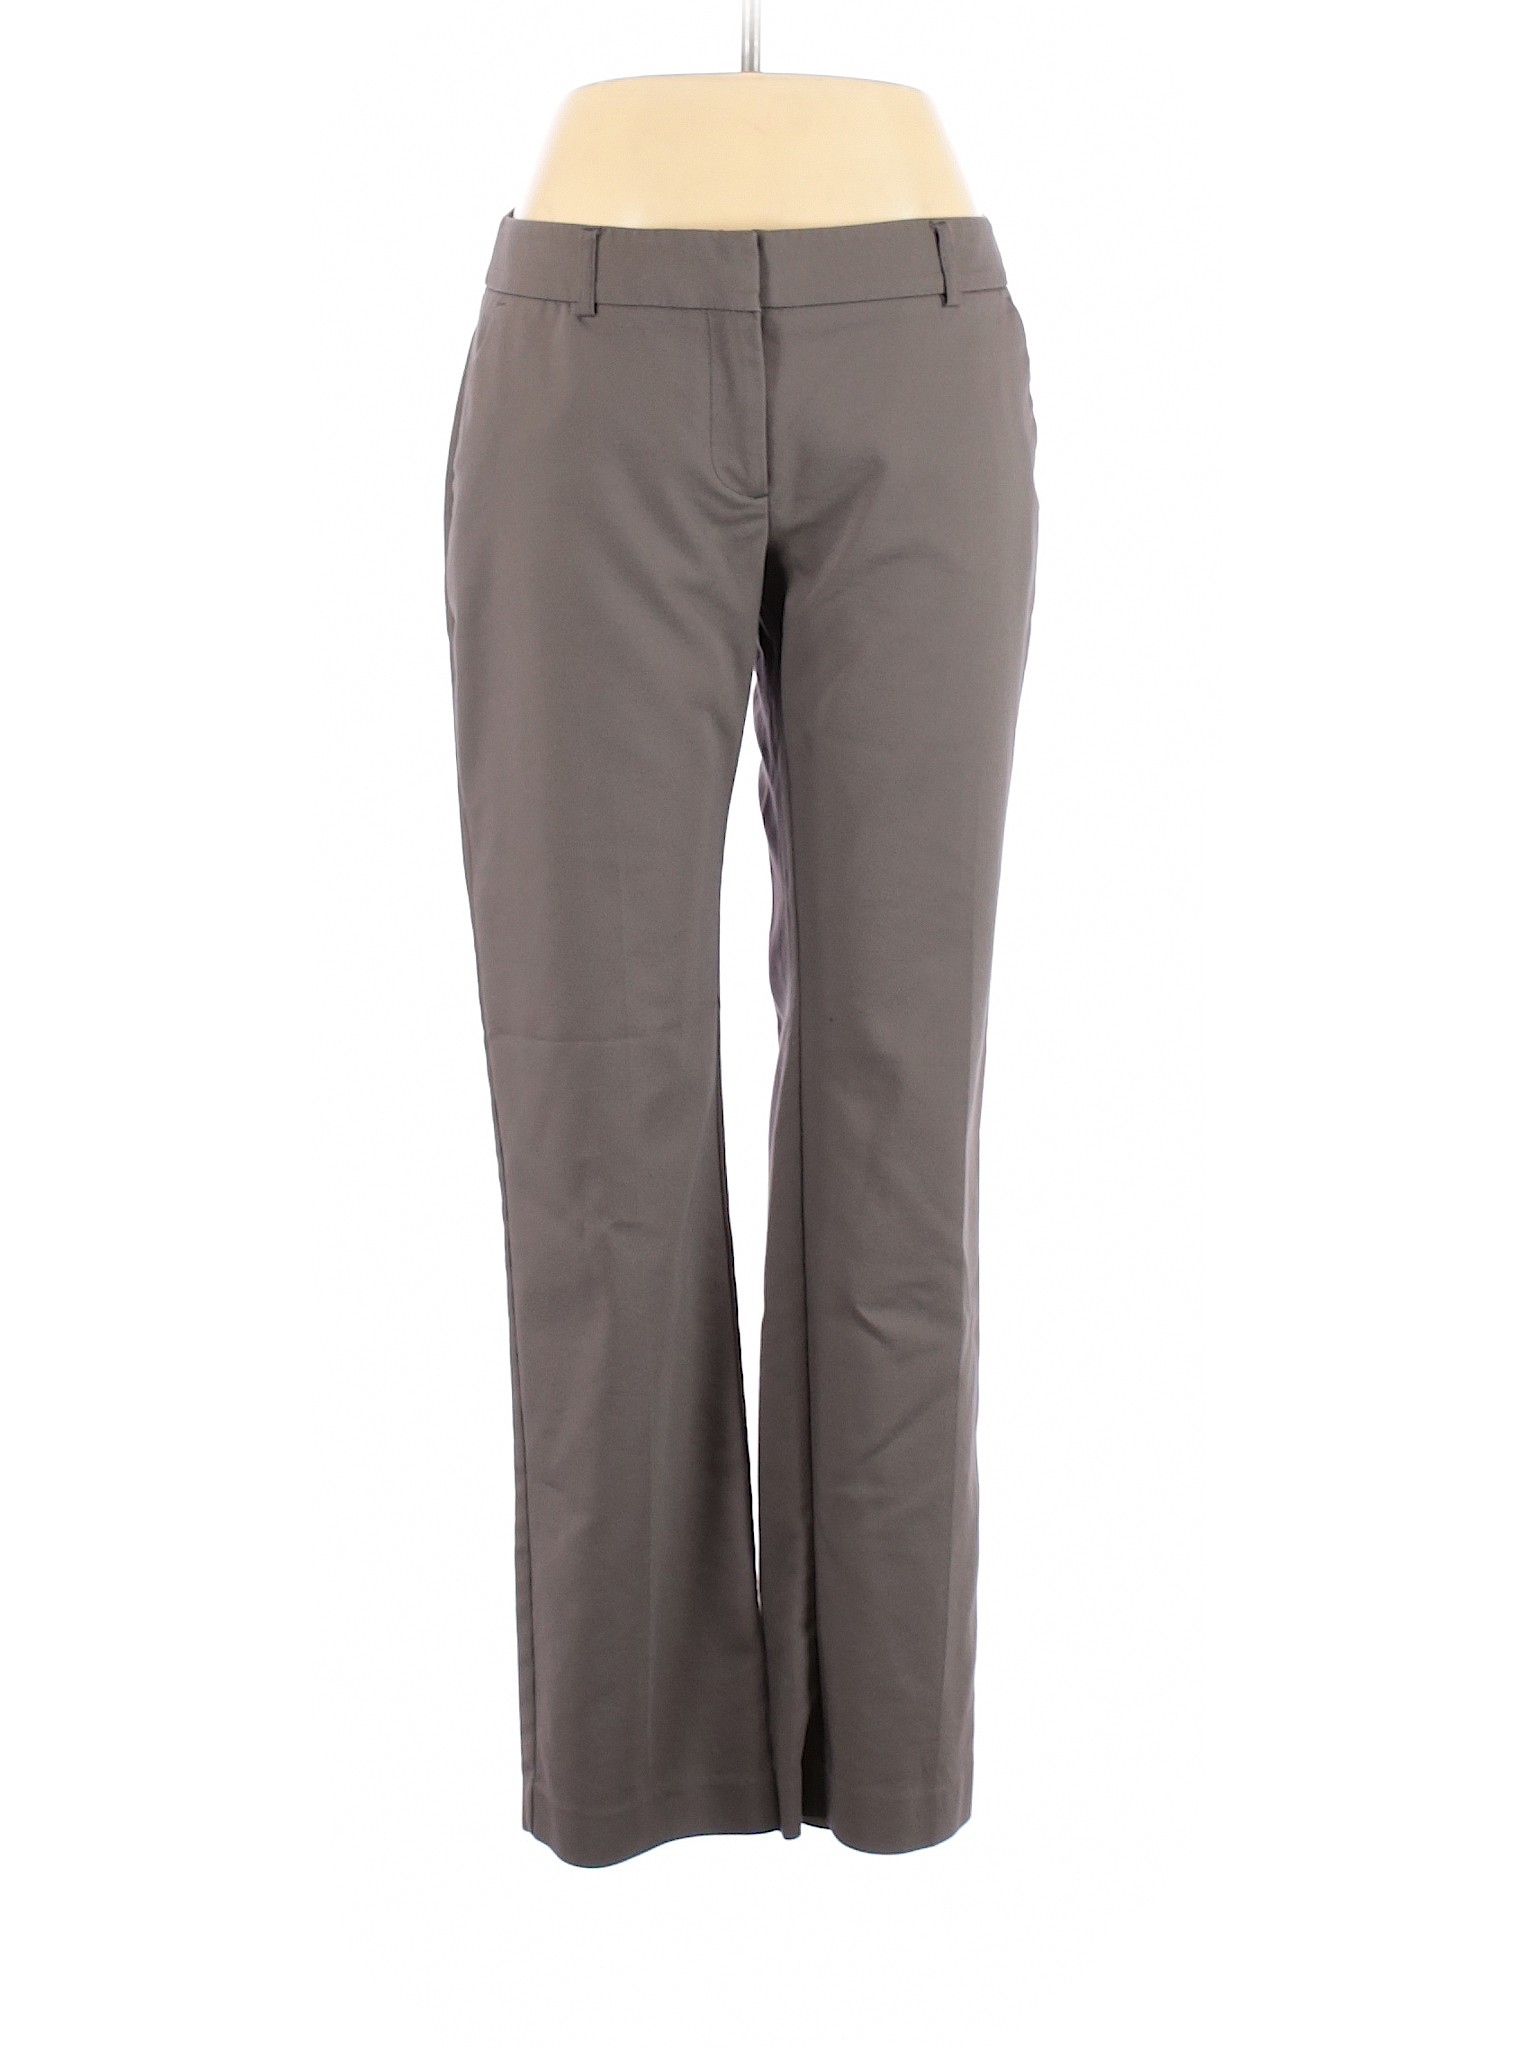 Apt. 9 Women Gray Dress Pants 10 | eBay